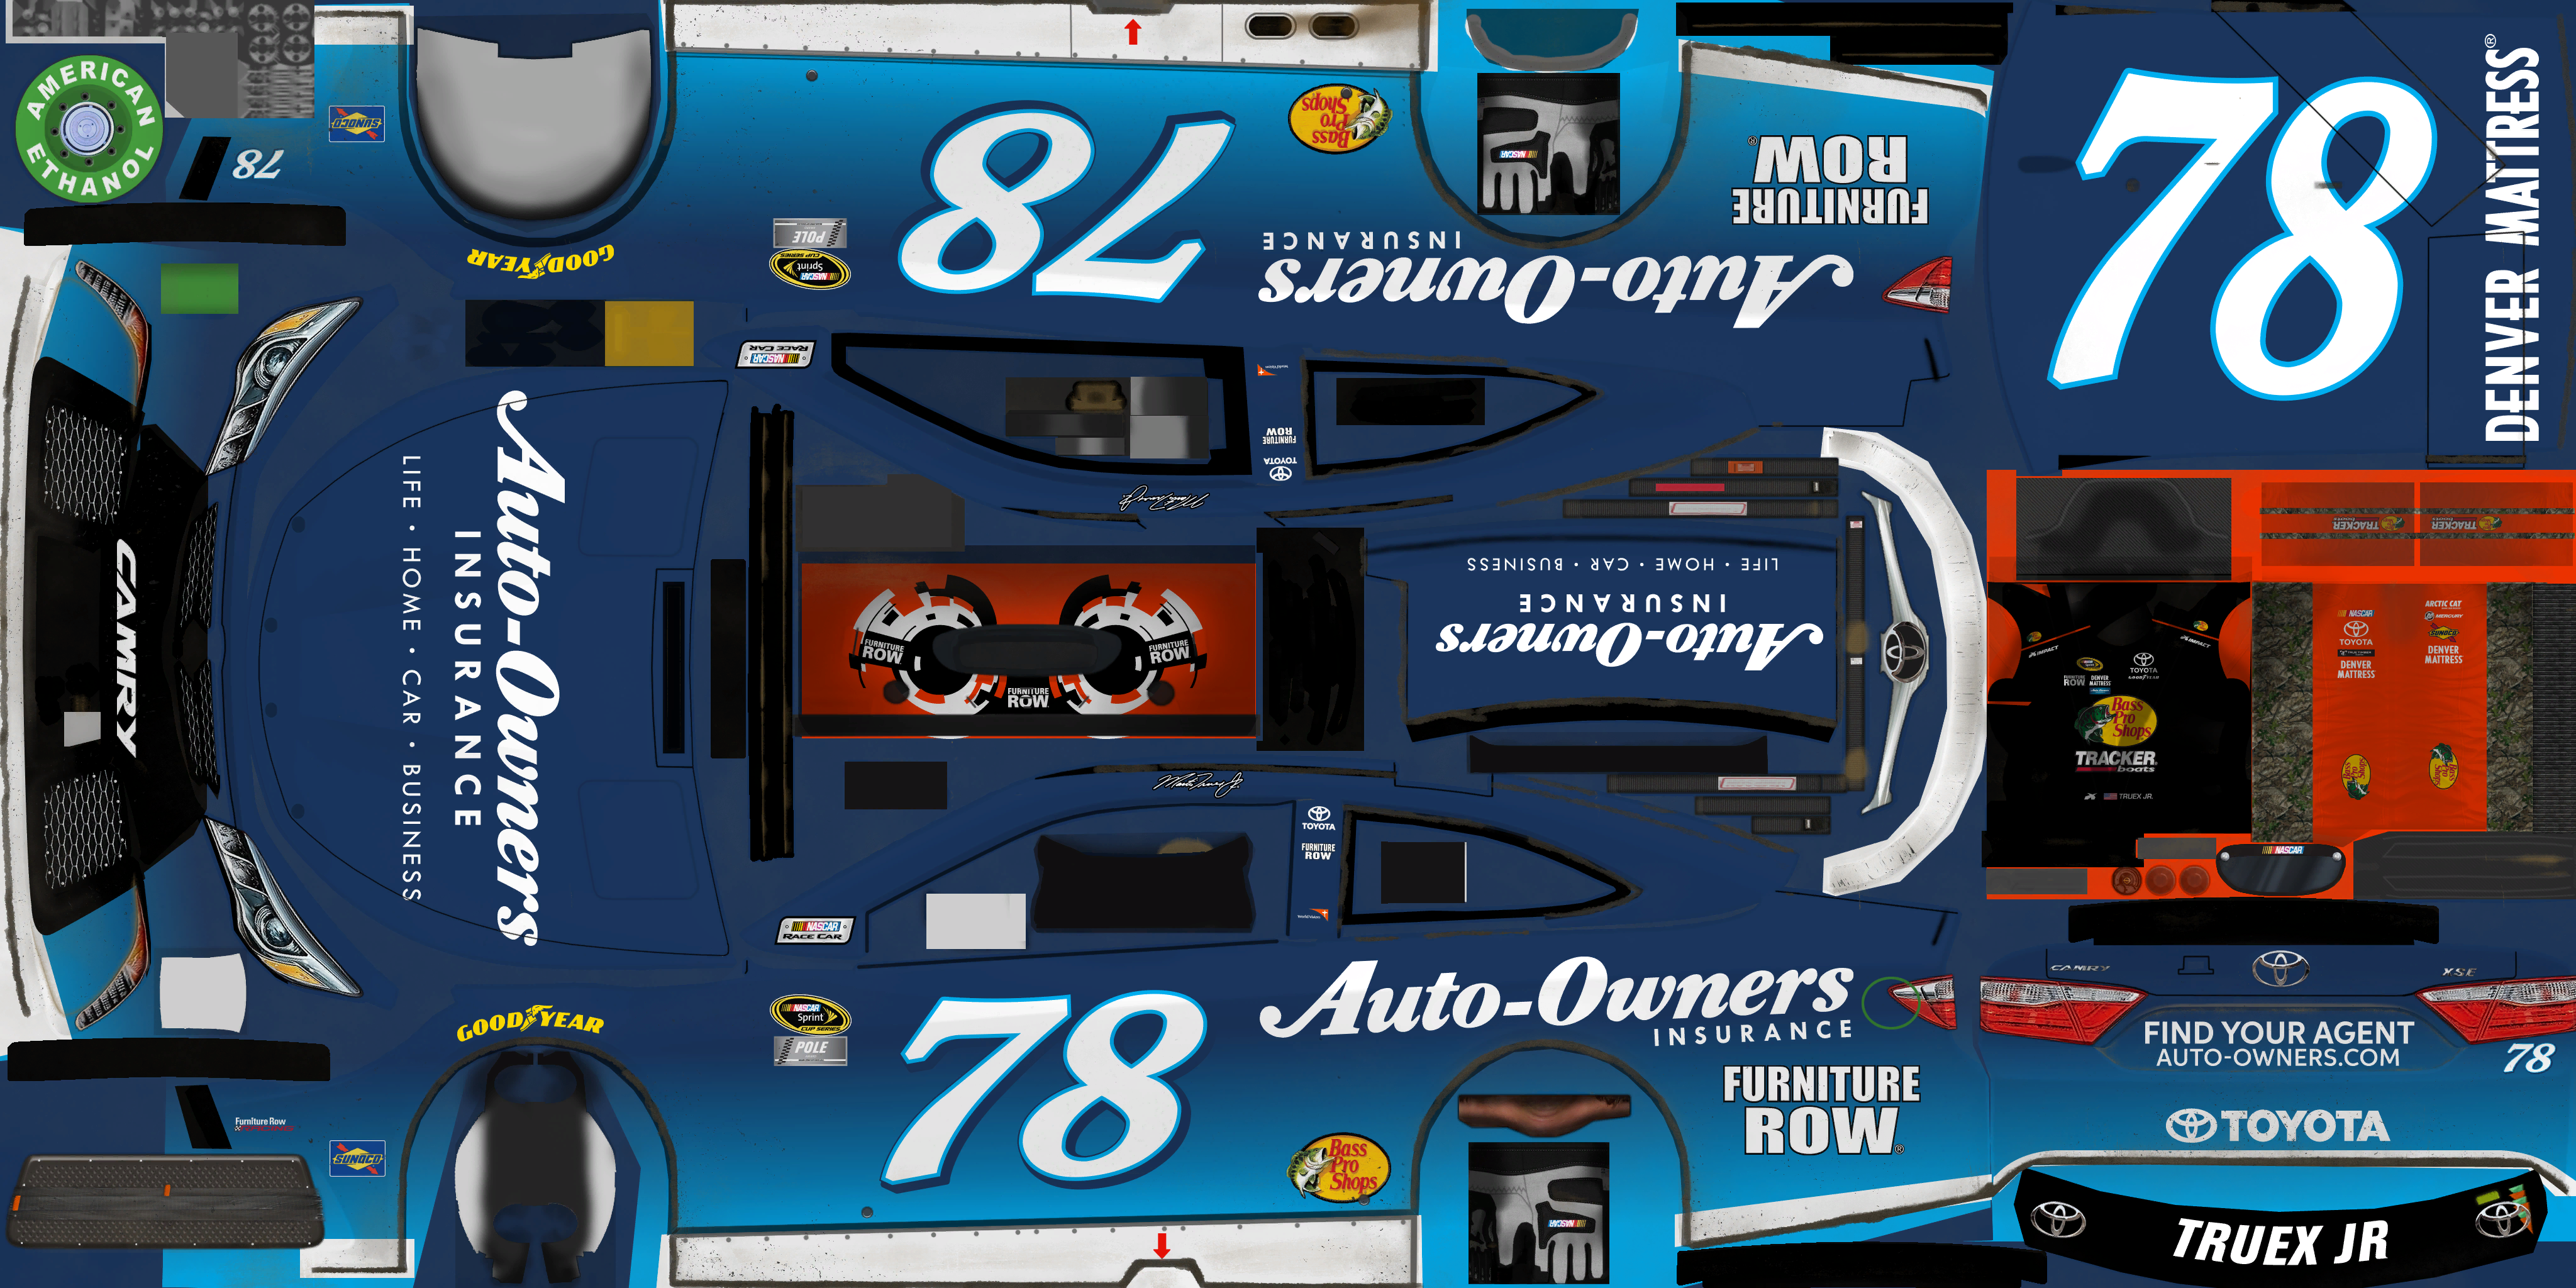 NASCAR Heat Evolution - #78 Martin Truex Jr. (Auto-Owners Insurance)